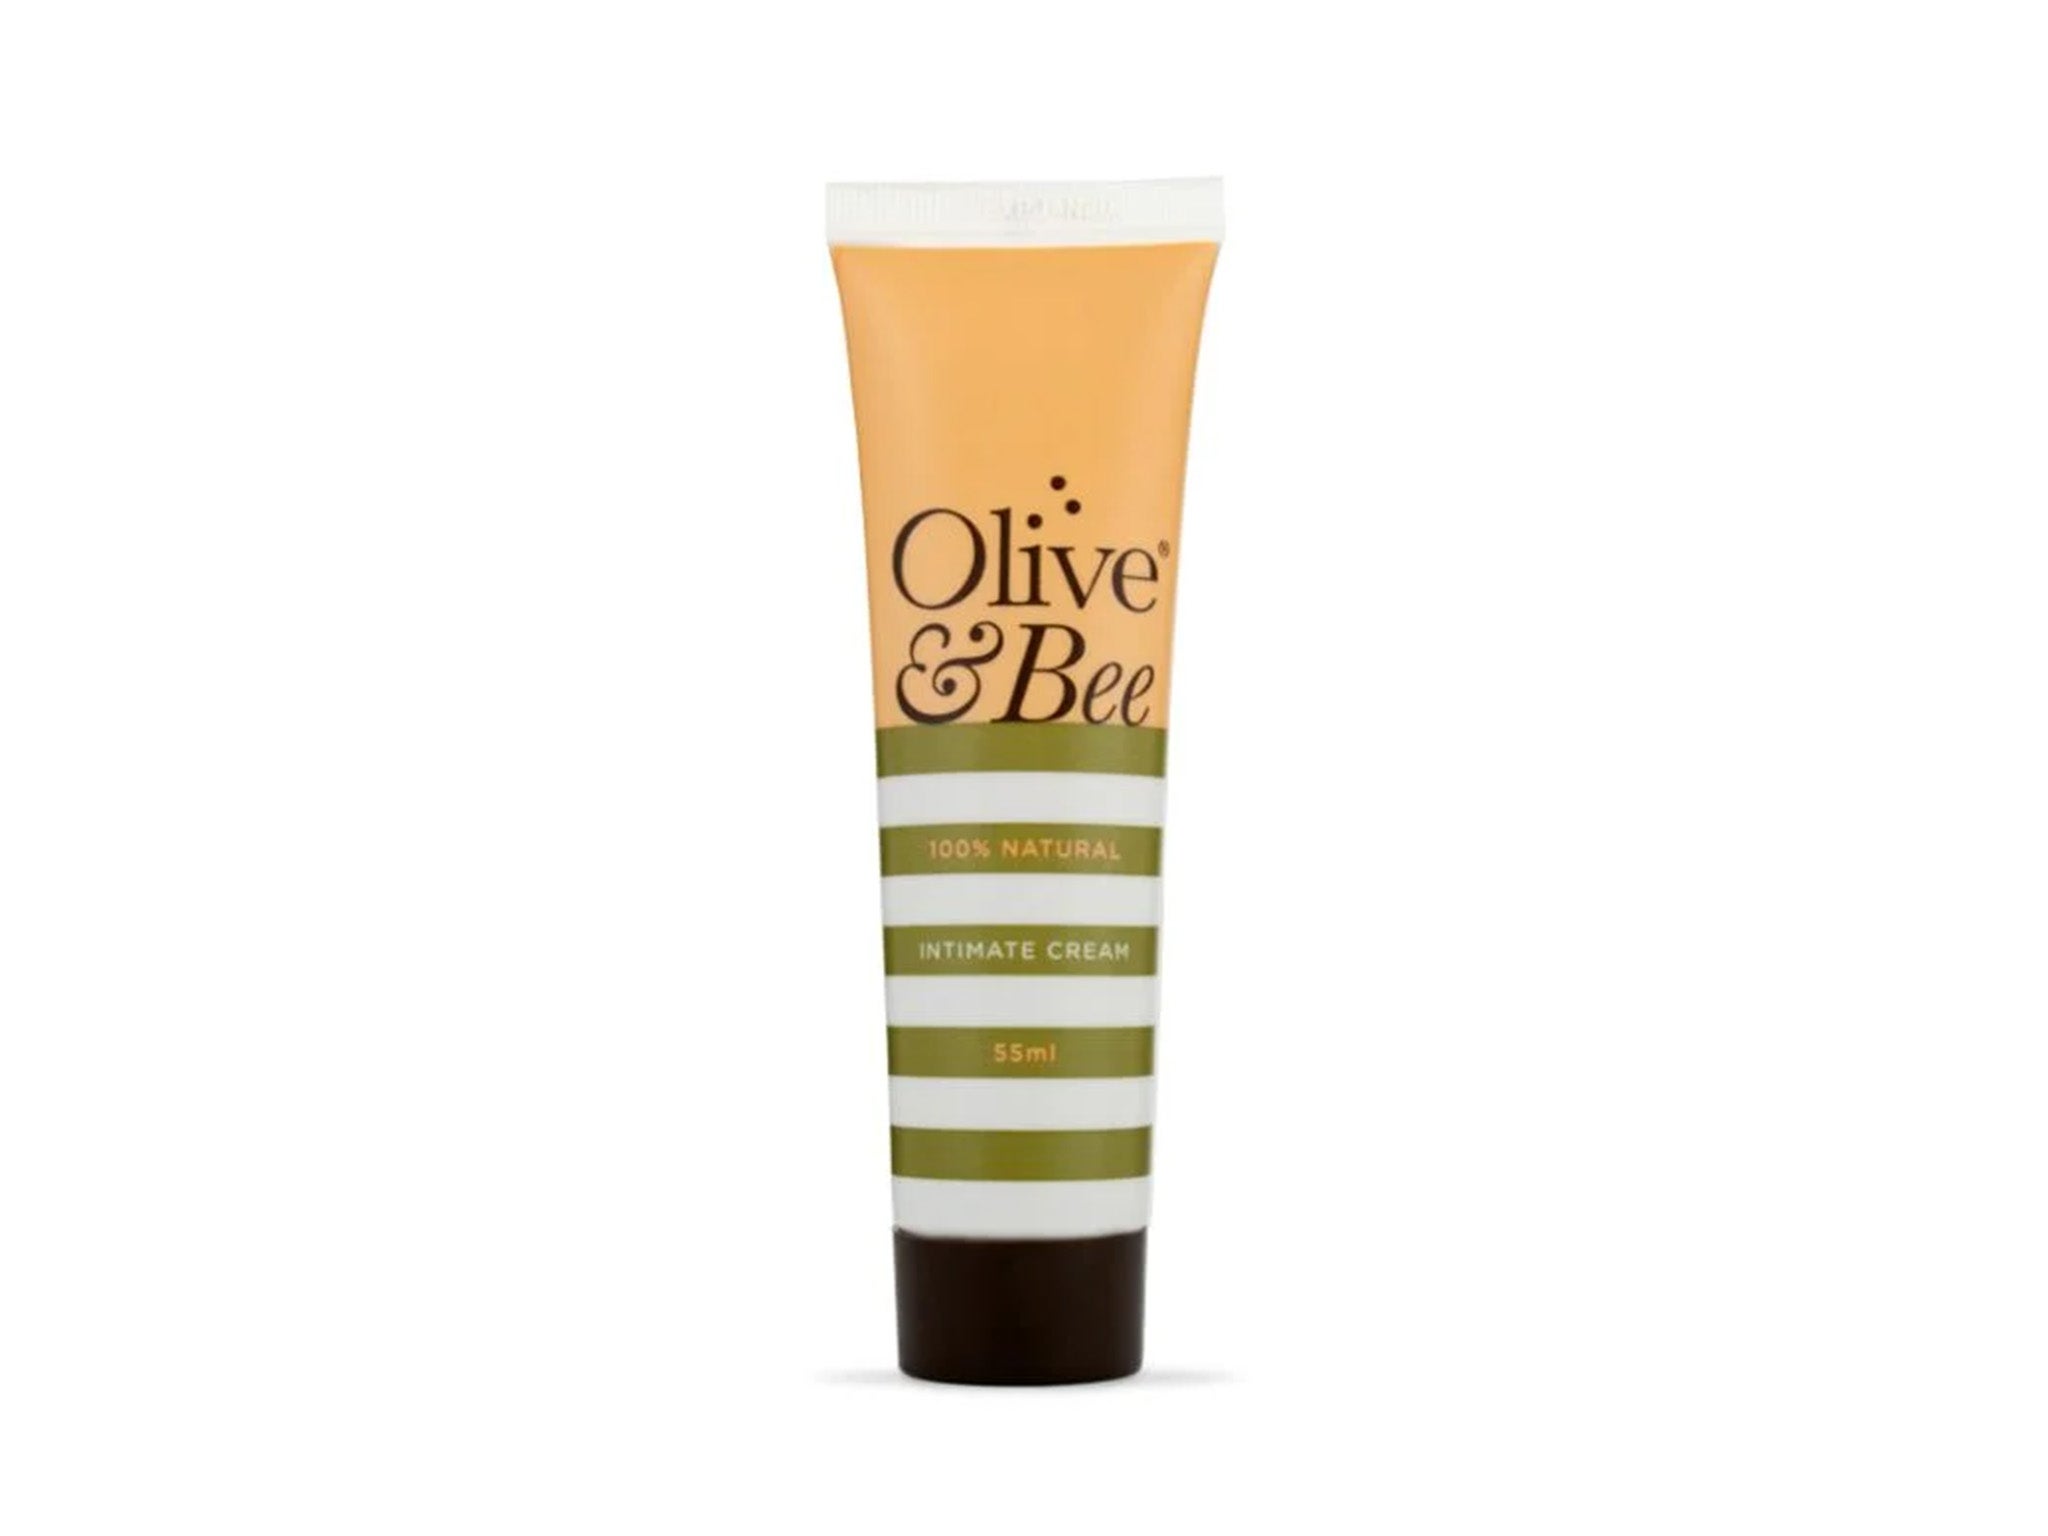 Olive & Bee natural intimate cream.jpg